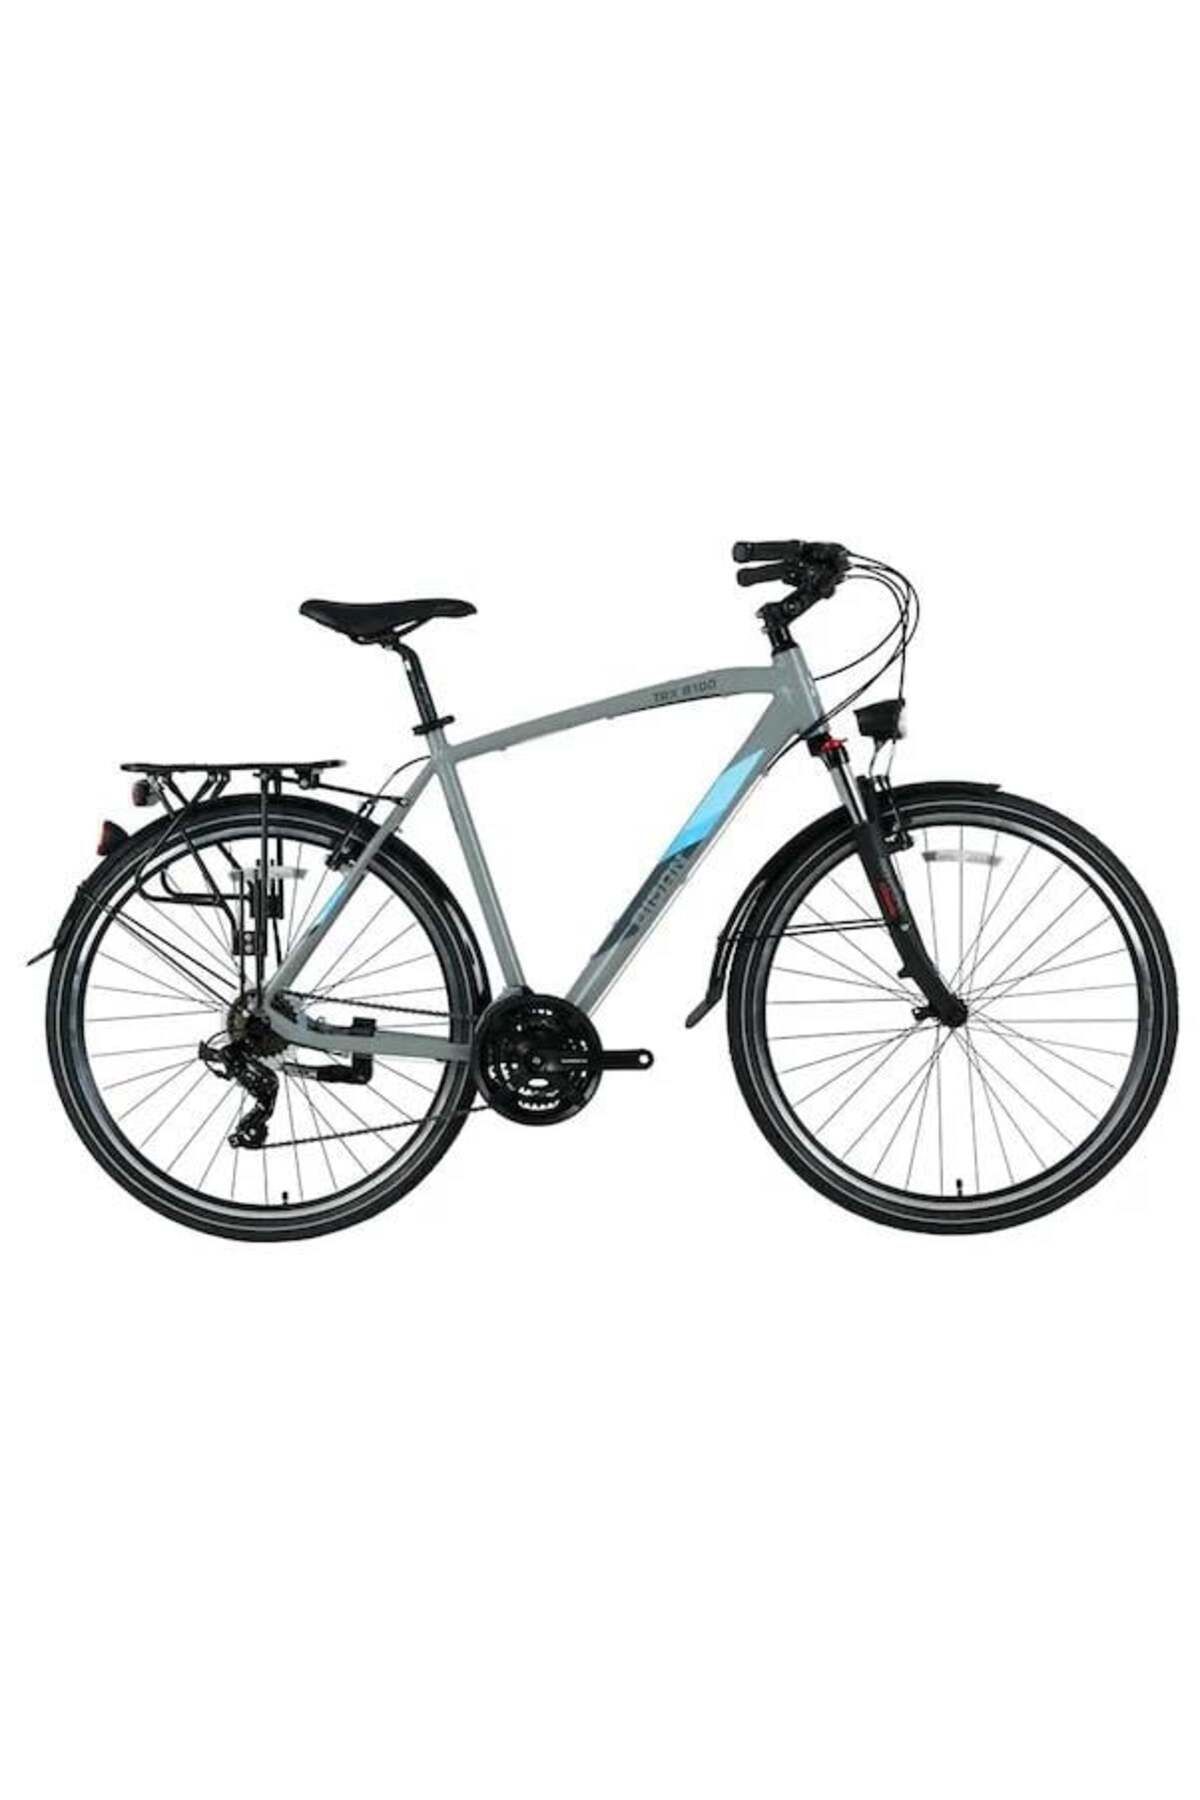 Bisan Trx 8100 Cıty Erkek Şehir Bisikleti 52cm V 28 Jant 21 Vites Açık Metal Gri Yeşil Beyaz